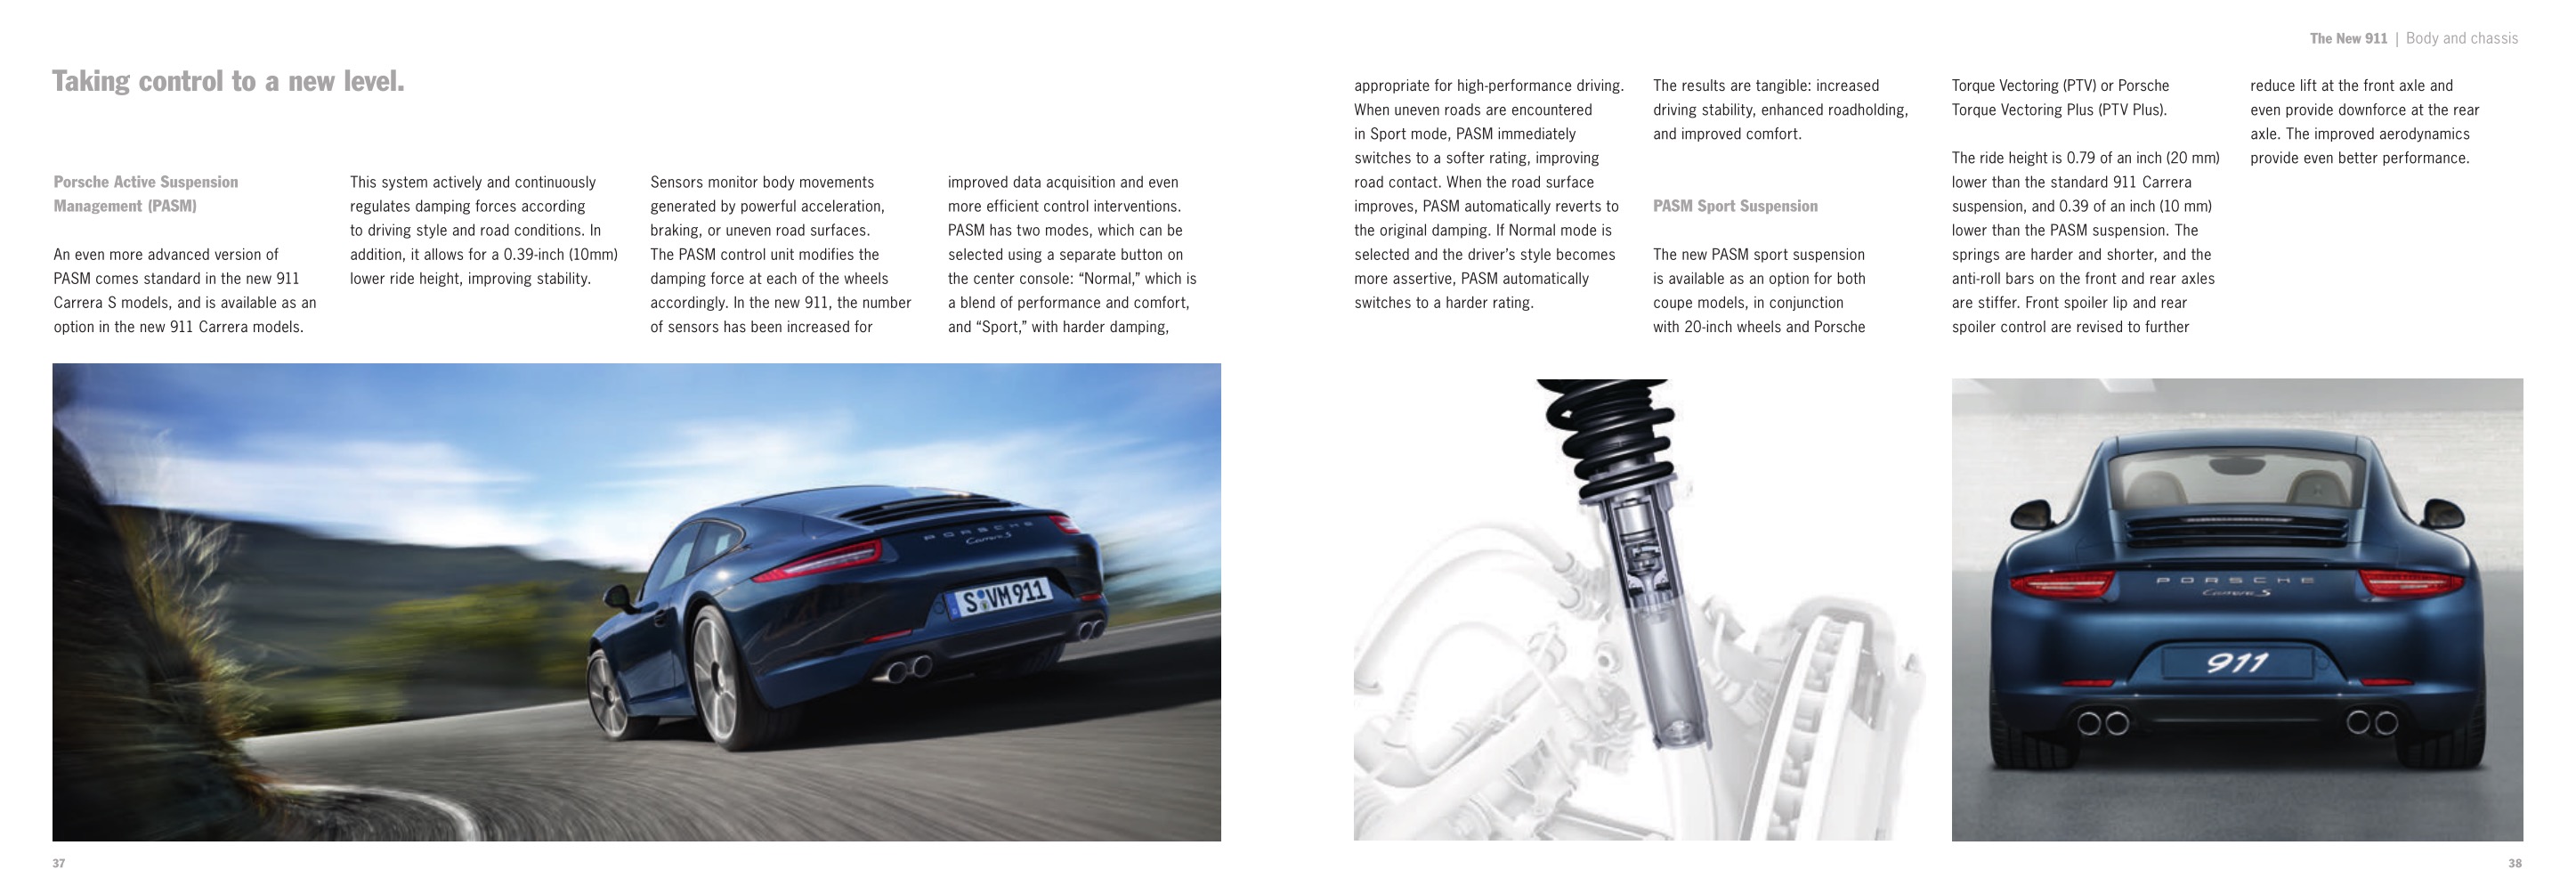 2012 Porsche 911 991 Brochure Page 37